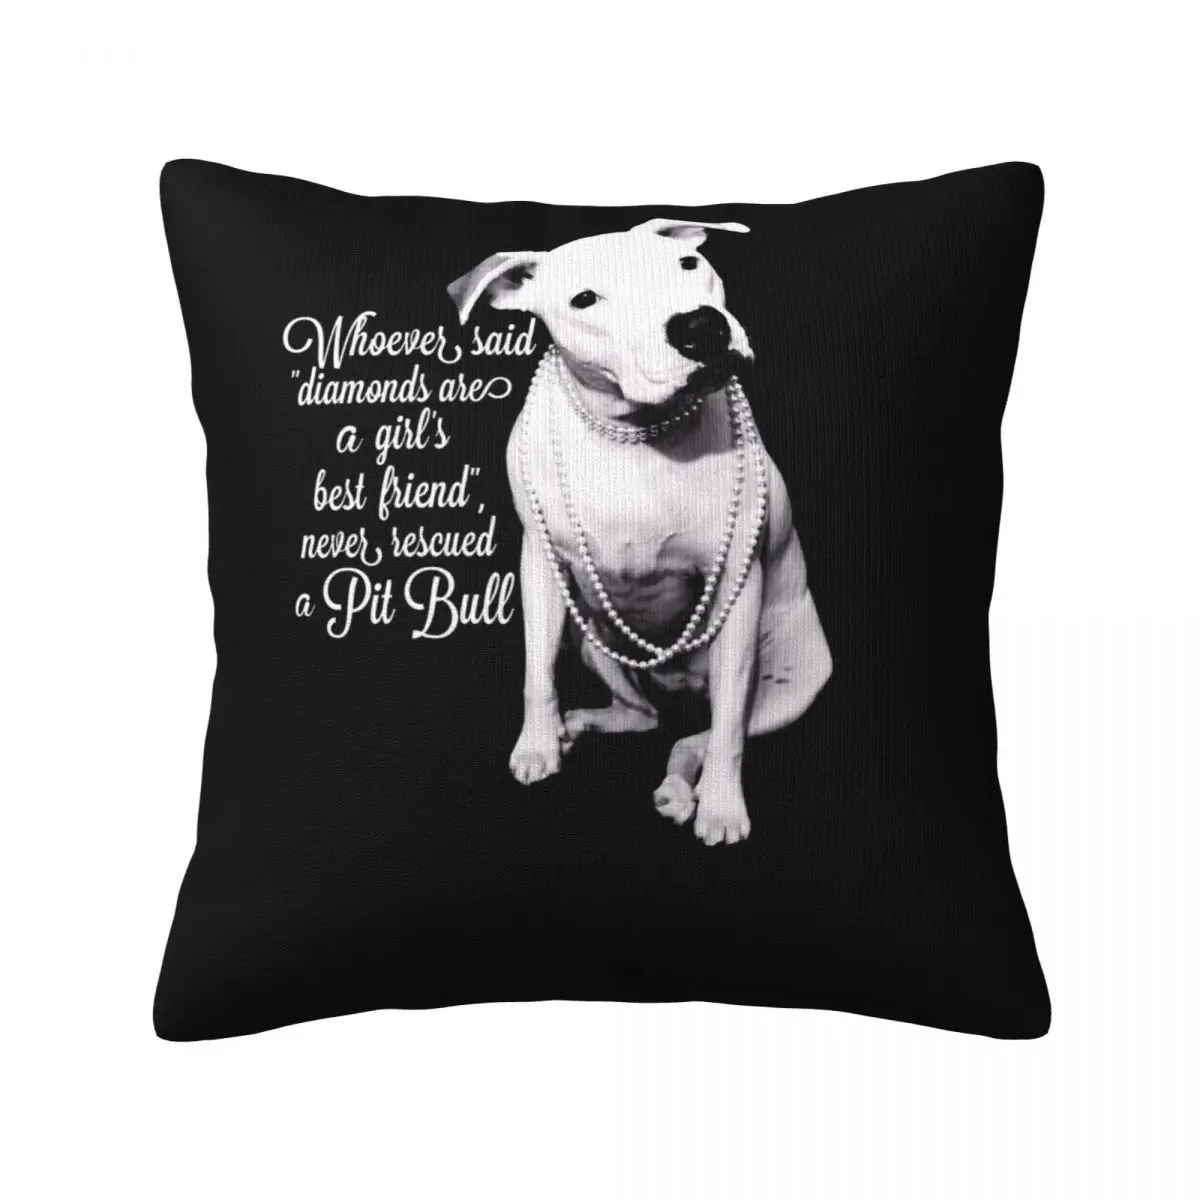 

Pitbull Throw Pillow Cover Decorative Pillow Covers Home Pillows Shells Cushion Cover Zippered Pillowcase